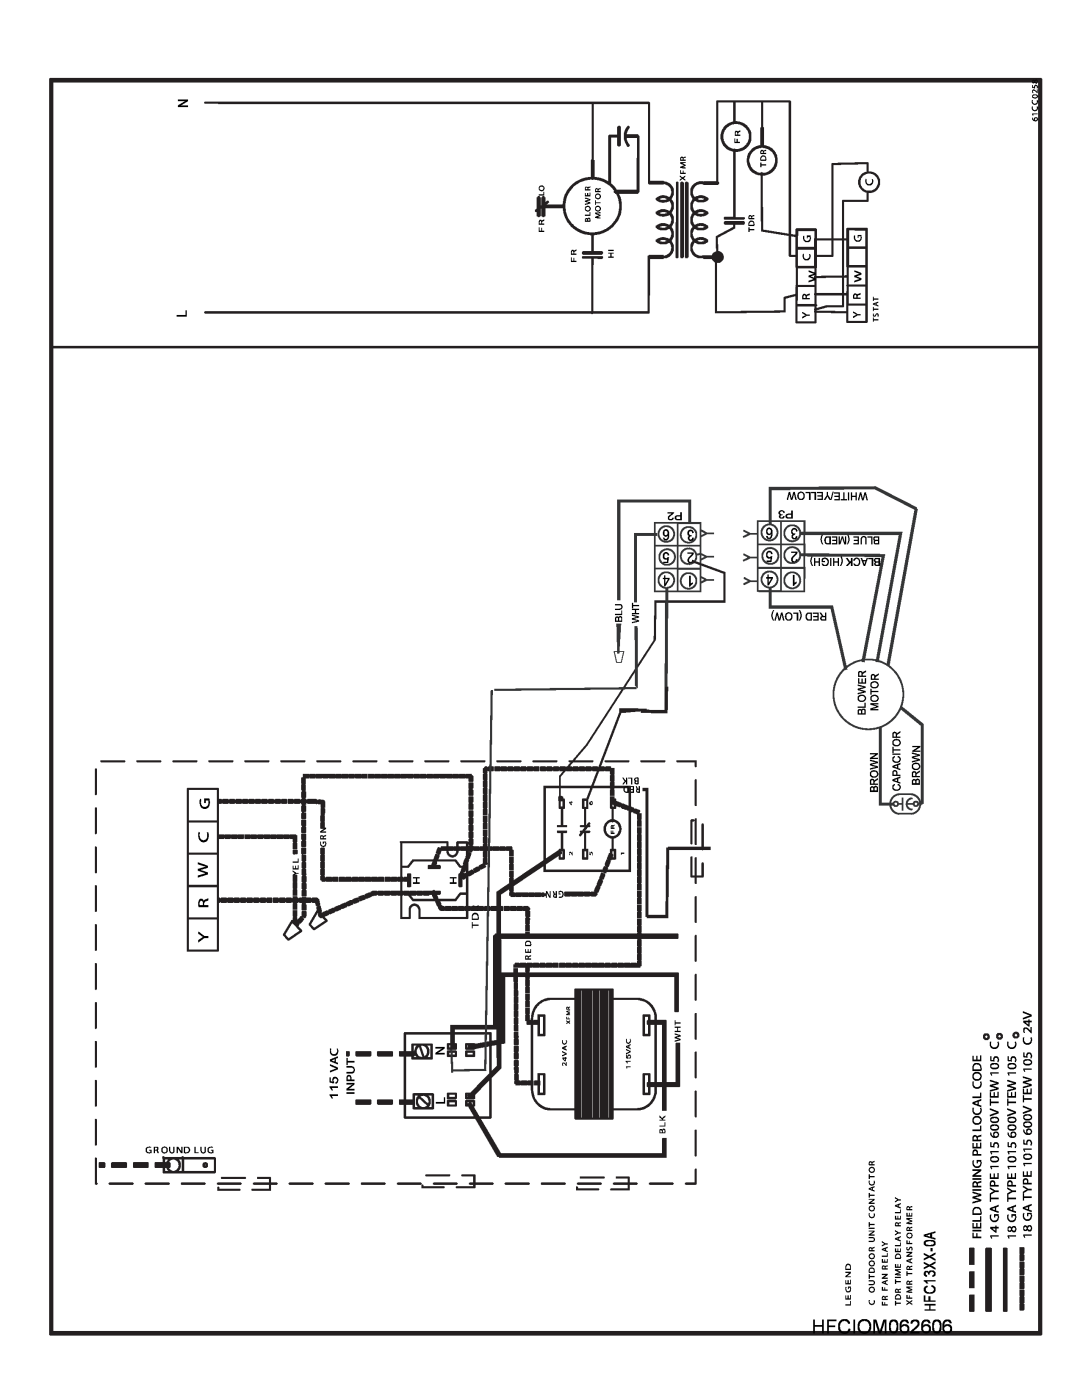 Heat Controller HFC13XX-0A manual HFCIOM062606, 115 VAC, Input 